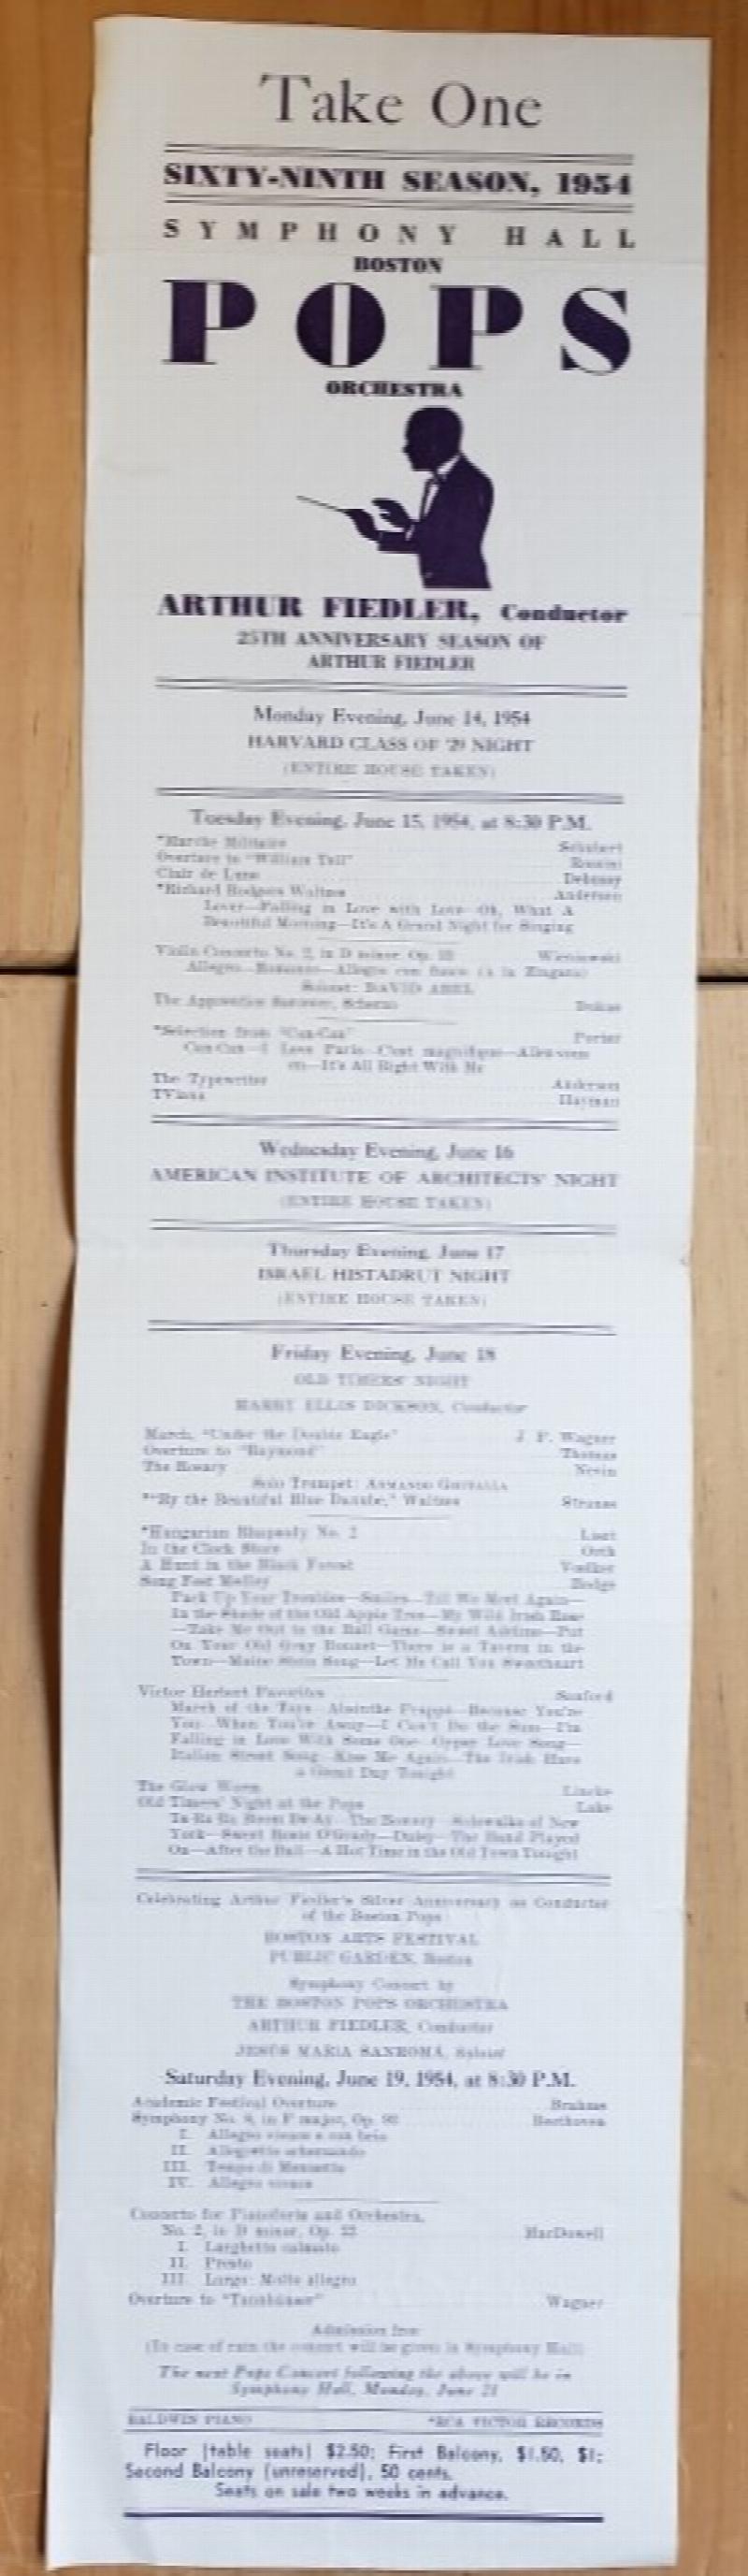 Image for Original Broadside - "Take One; Sixty-ninth Season, 1954, Symphony Hall, Boston; Pops Orchestra, Arthur Fiedler, Conductor; 25th Anniversary Season of Arthur Fiedler